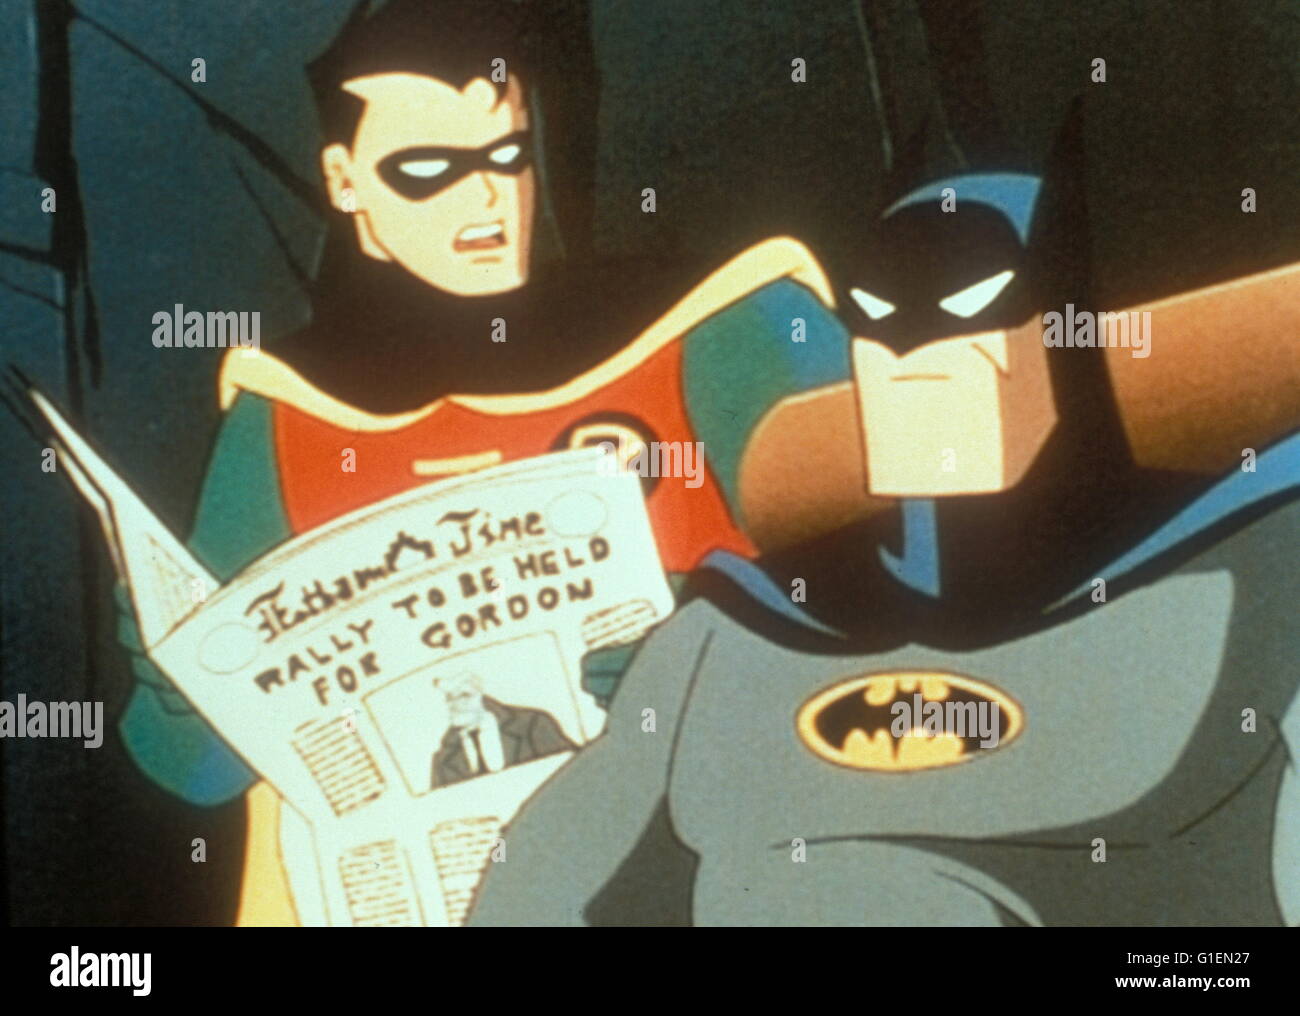 batman animated series robin